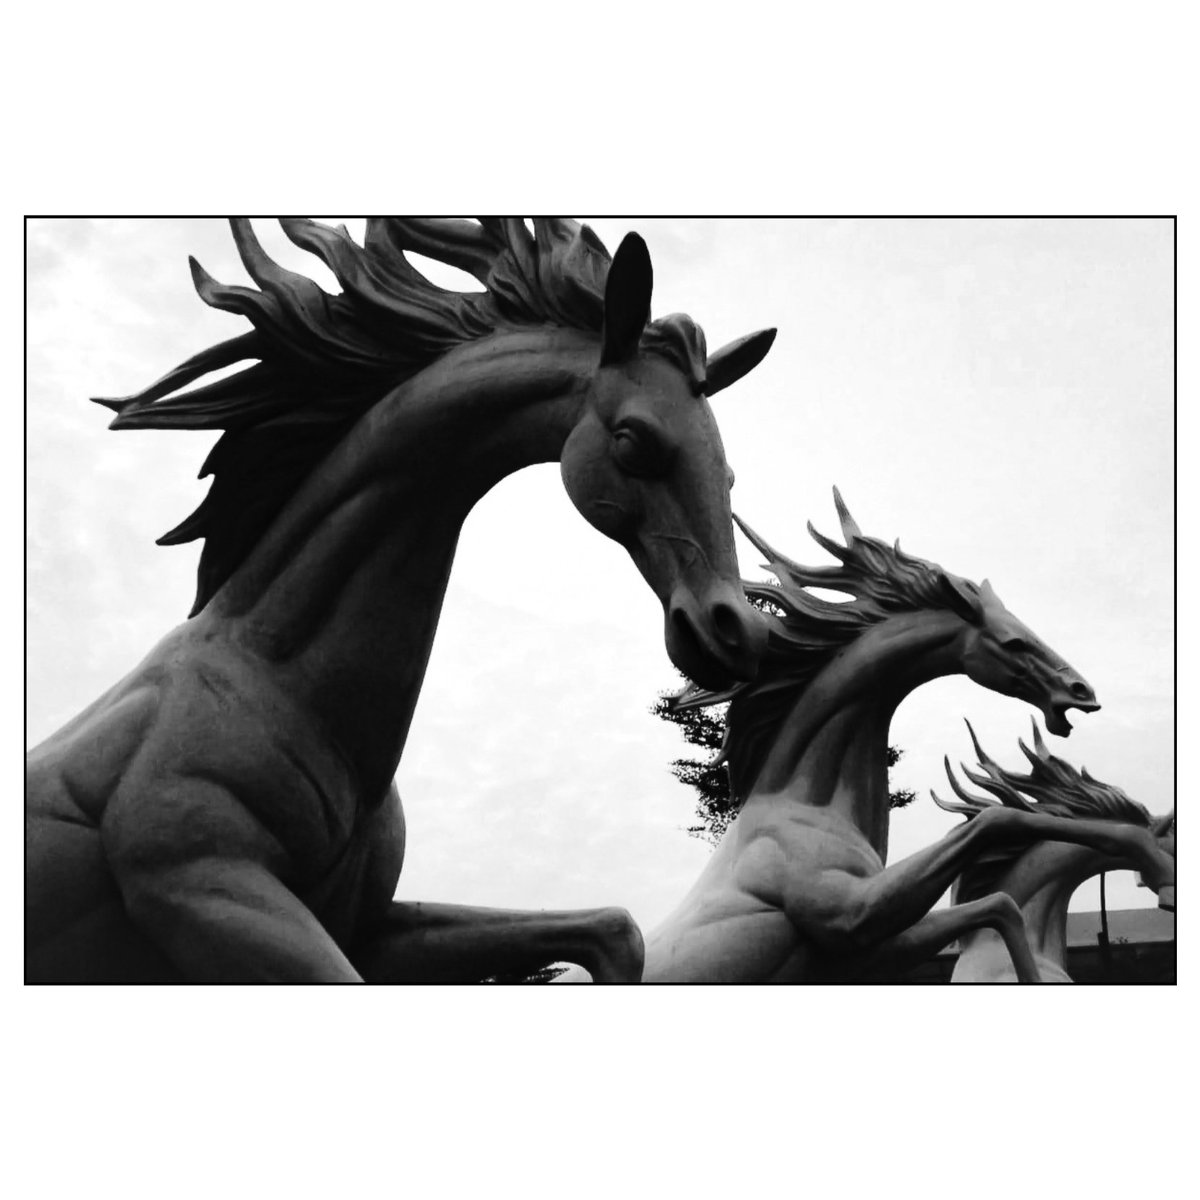 Horse statue icon (Gresik, IDN 2023).
@StreetEvolution @street__hub @StreetPhotoInt 
#bnw_shot #bw_addiction #streethunters #Minimalism #LensCultureStreets #PeraPhotoGallery #bnw_asia #Thestreetphotographyhub #ss_hub